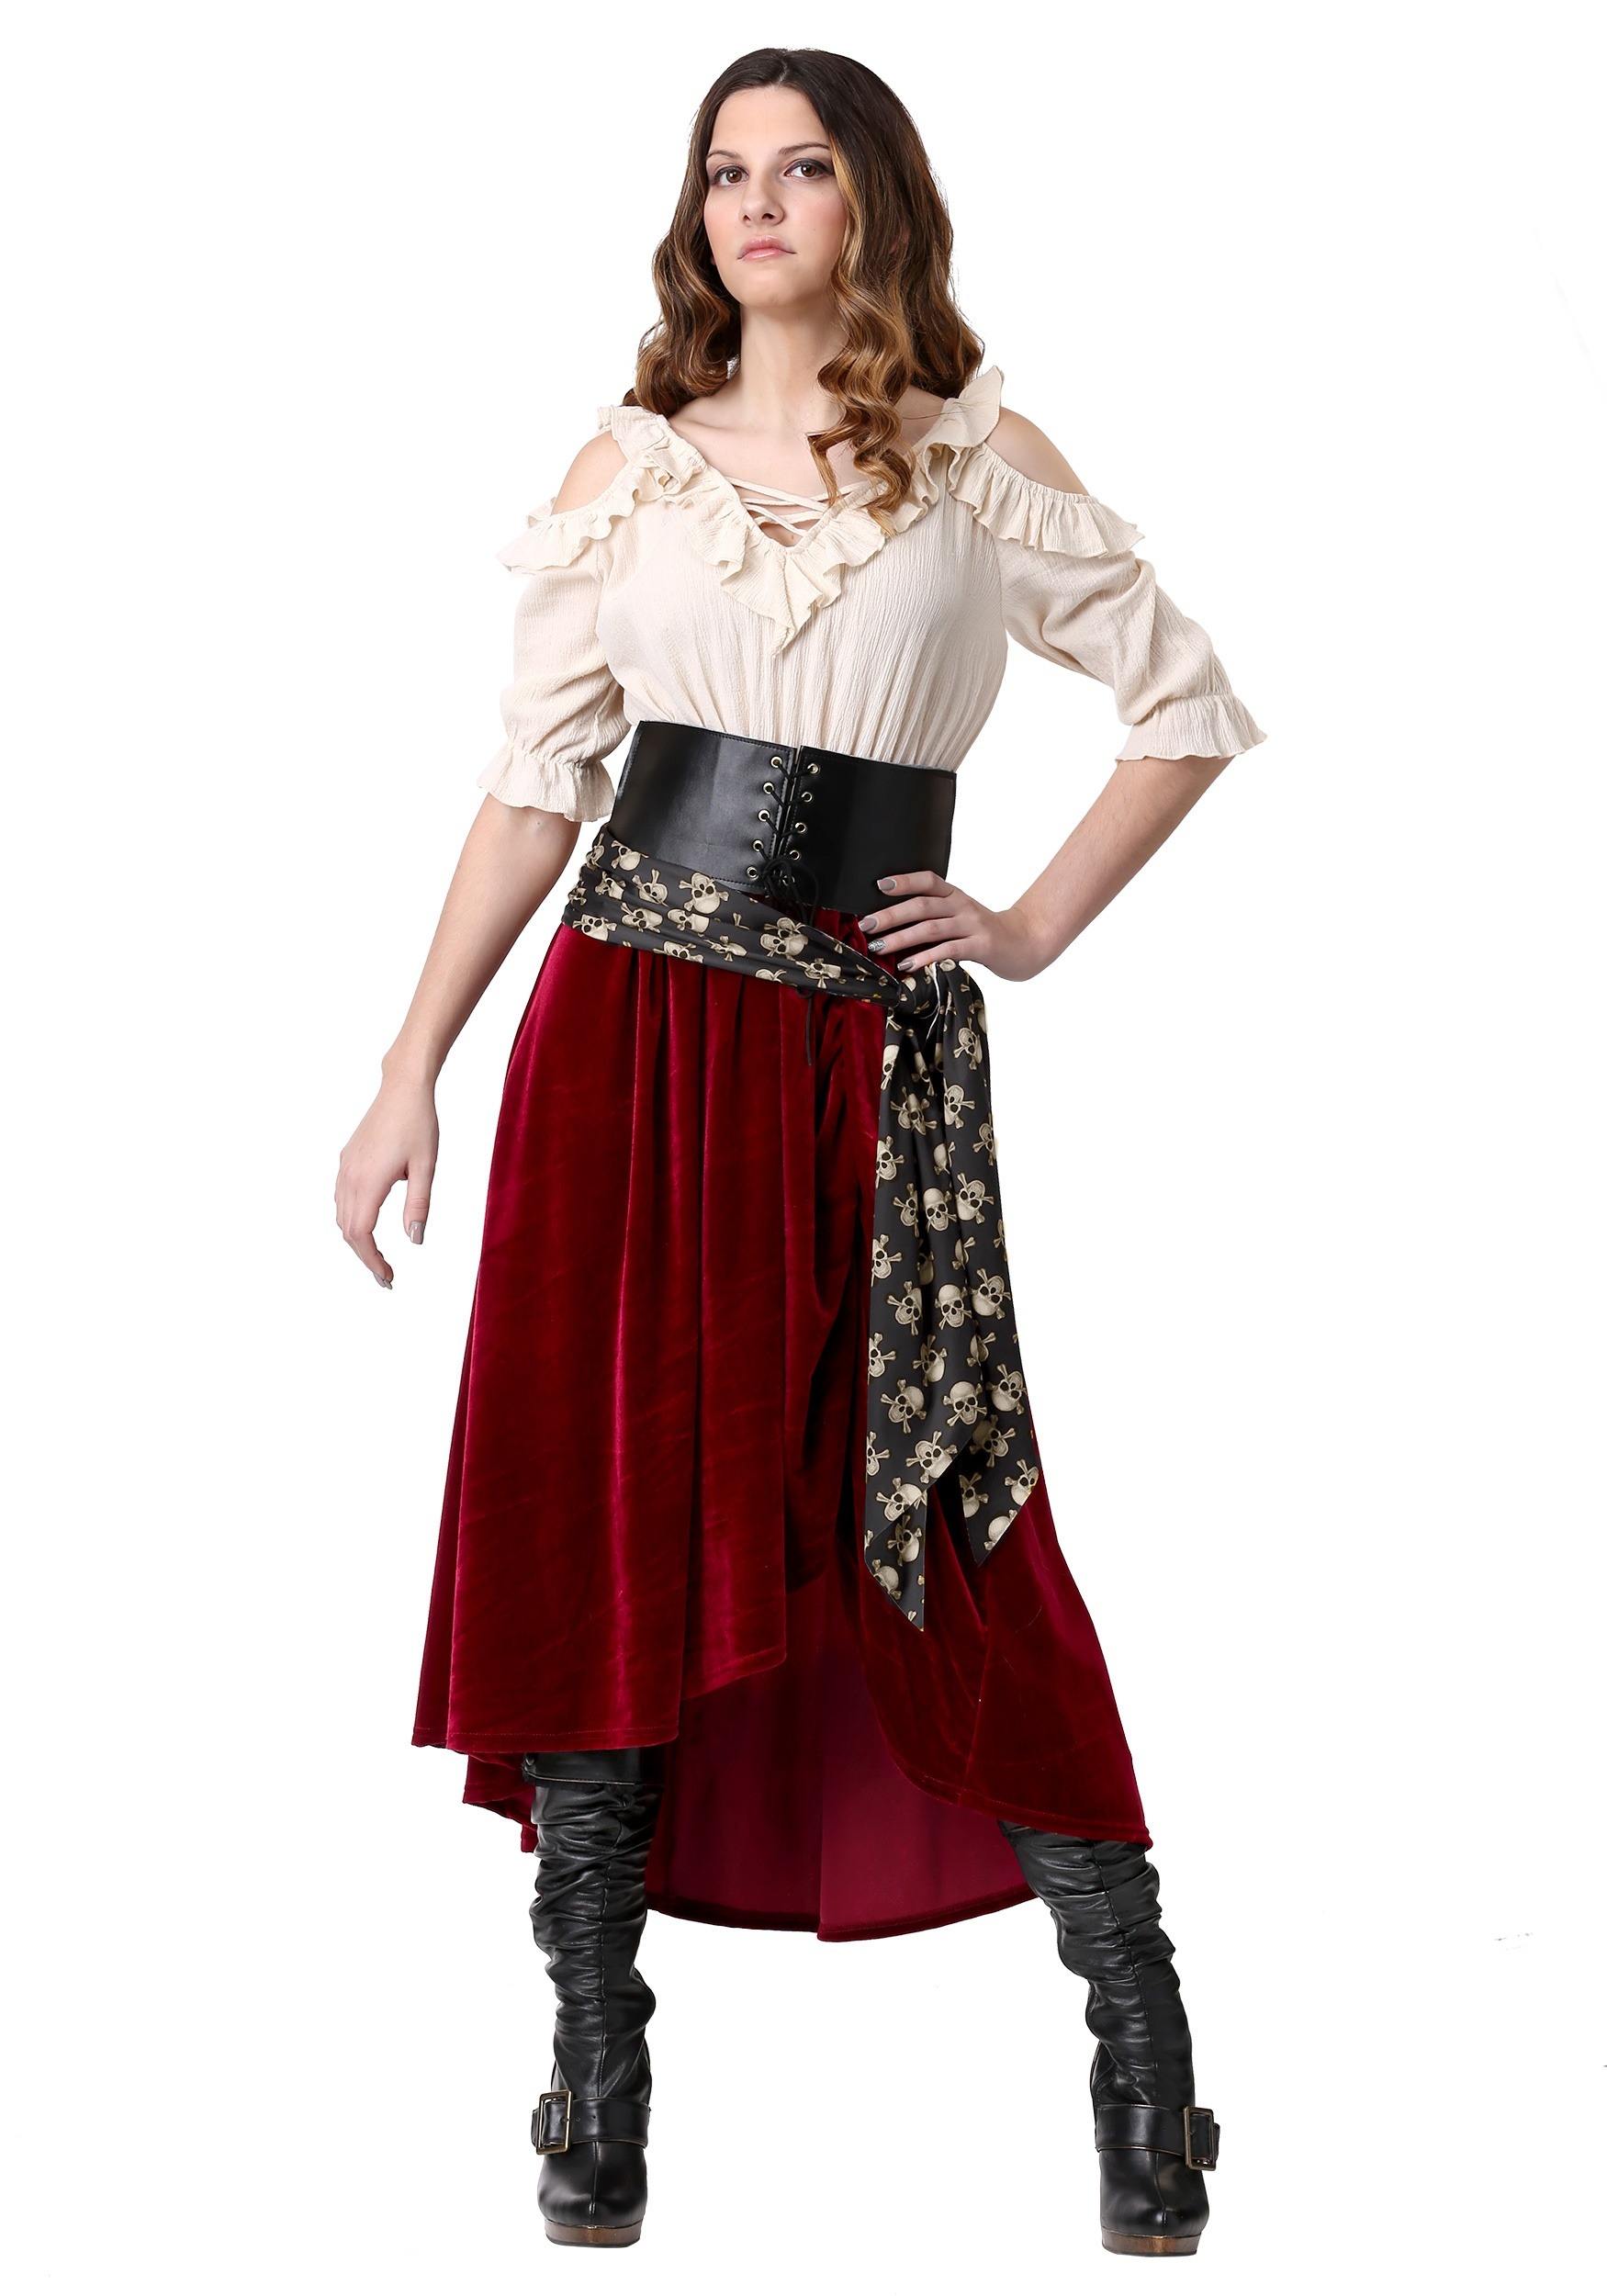 Photos - Fancy Dress FUN Costumes Roving Buccaneer Women's Costume Black/Brown/Red FUN0